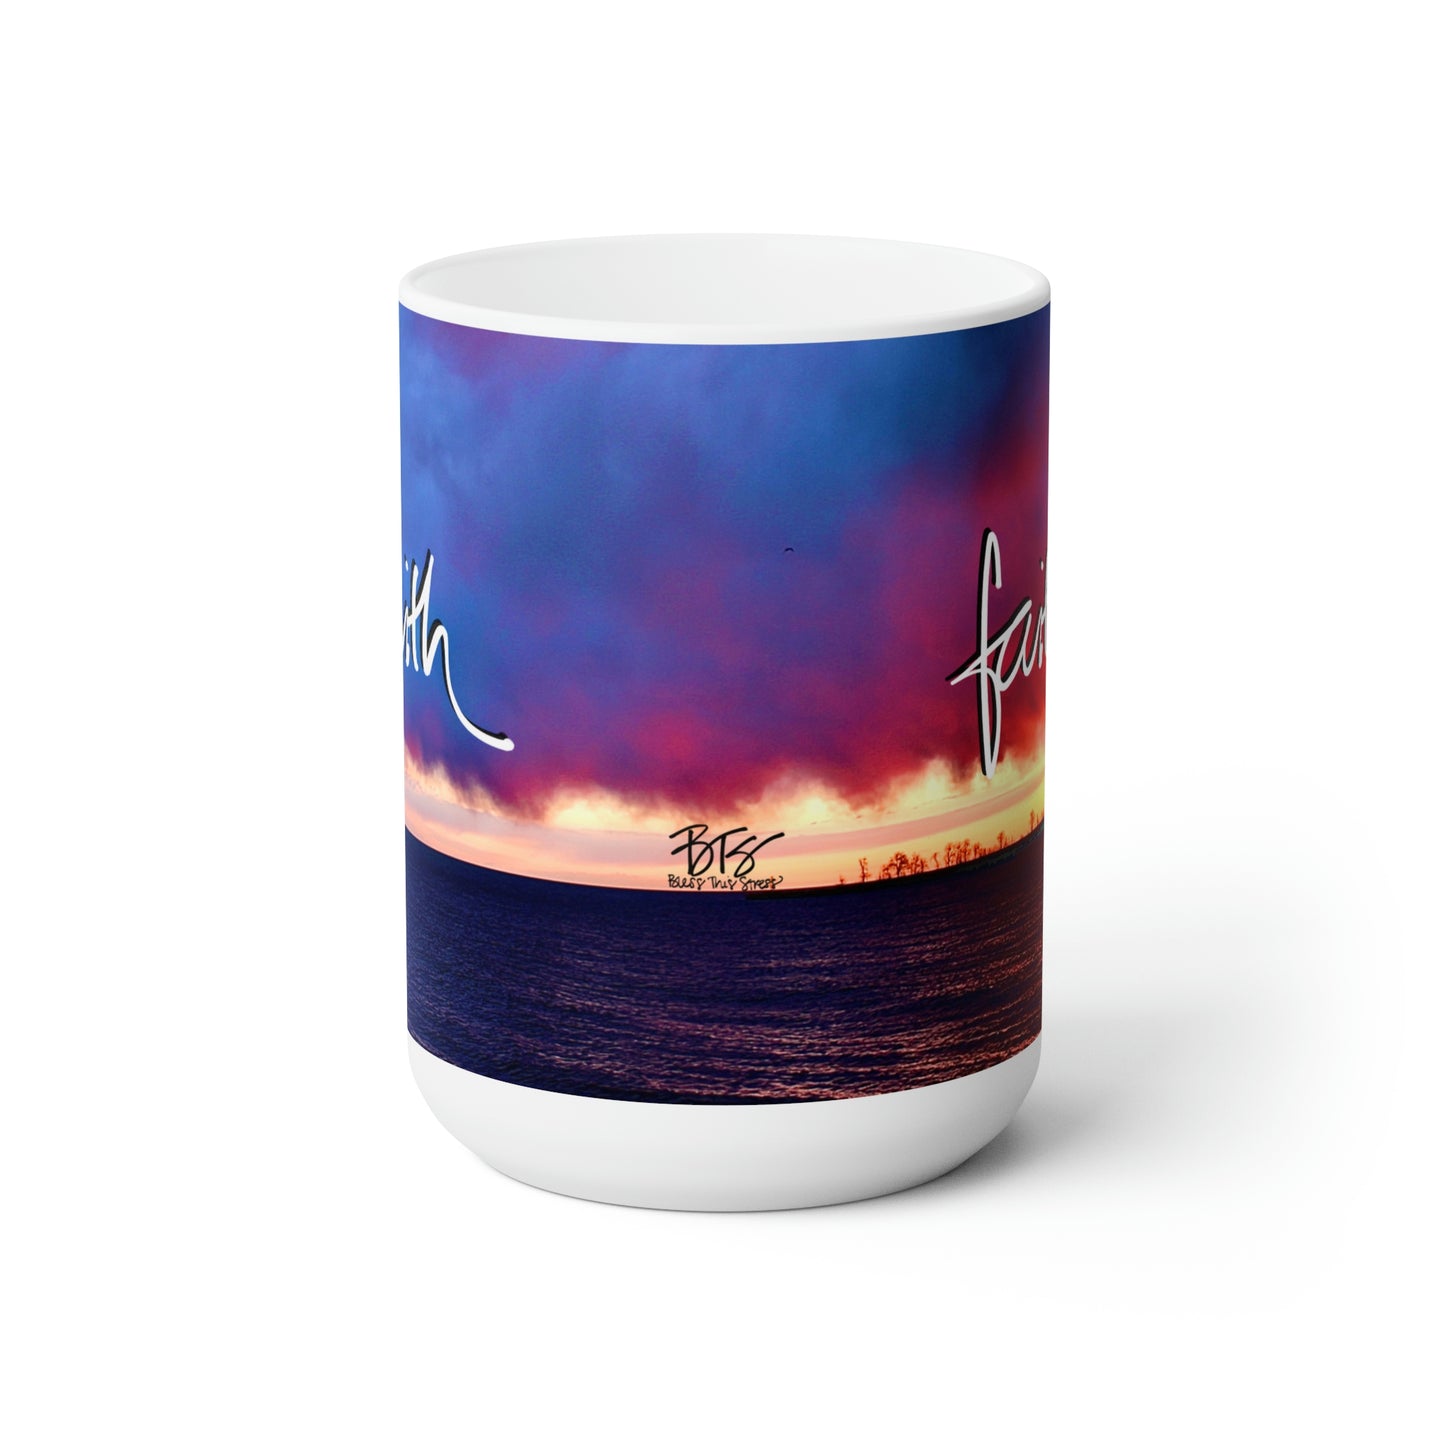 Handwritten "faith" Stormy Sunrise Ceramic Mug 15oz